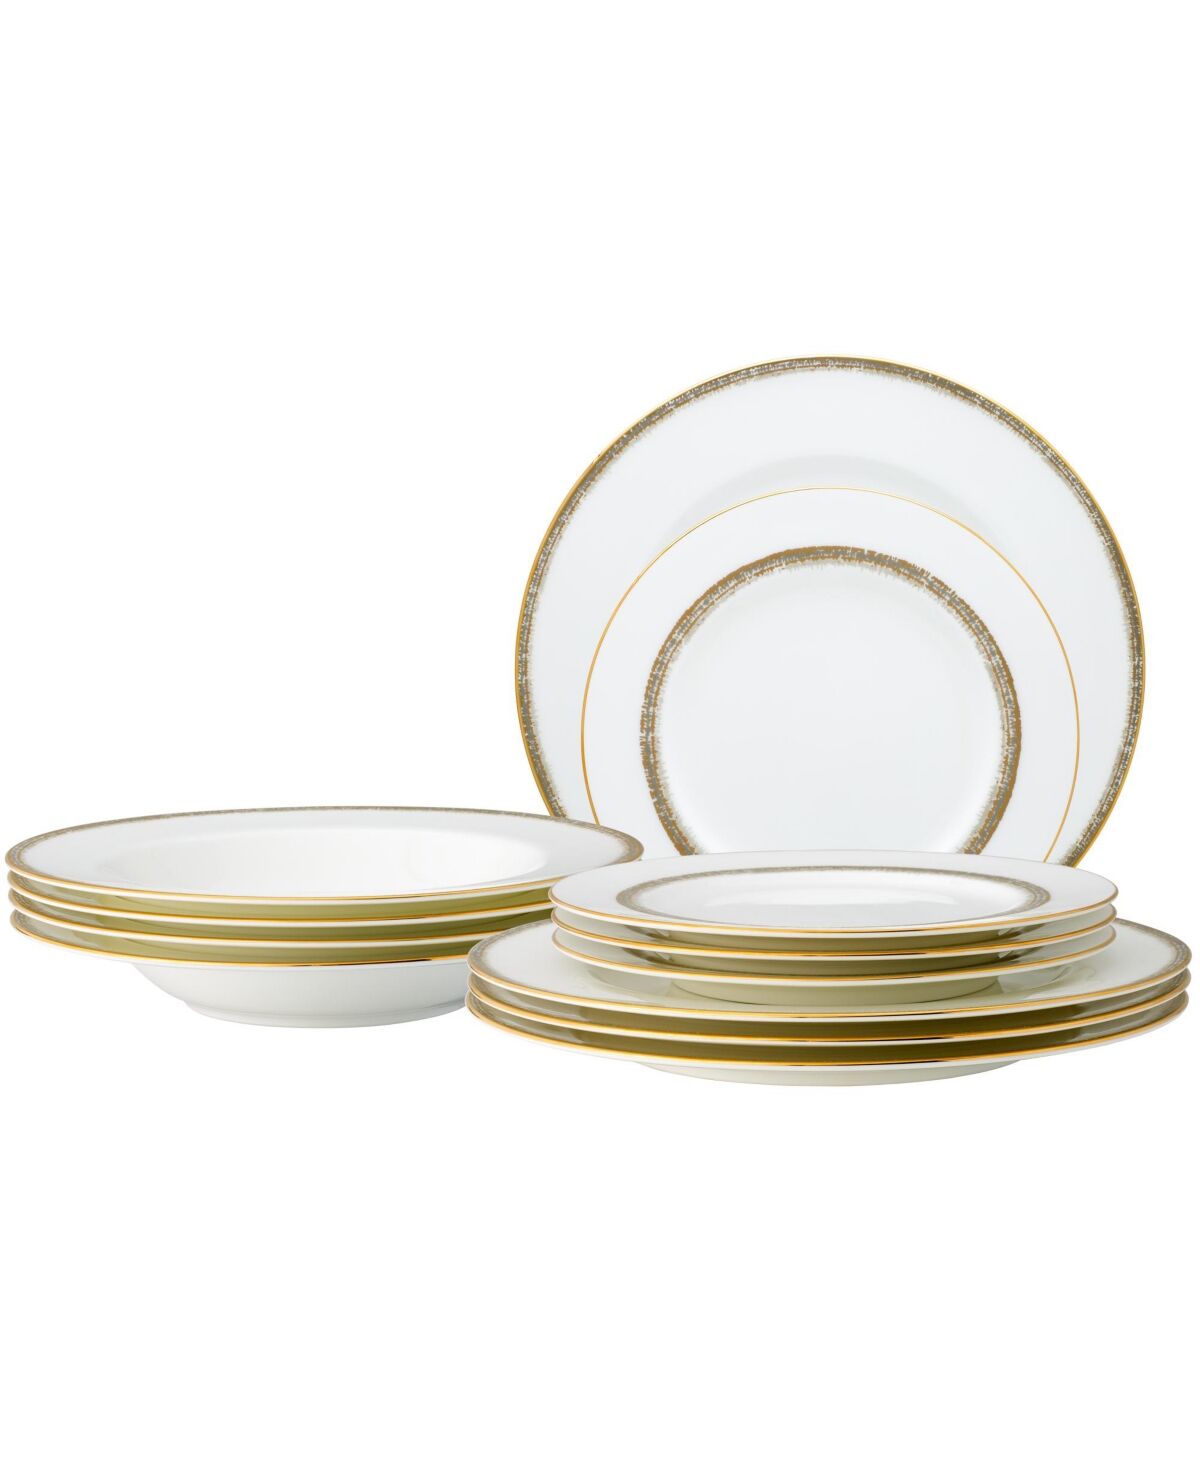 Noritake Haku 12 Pc Dinnerware Set - White And Gold